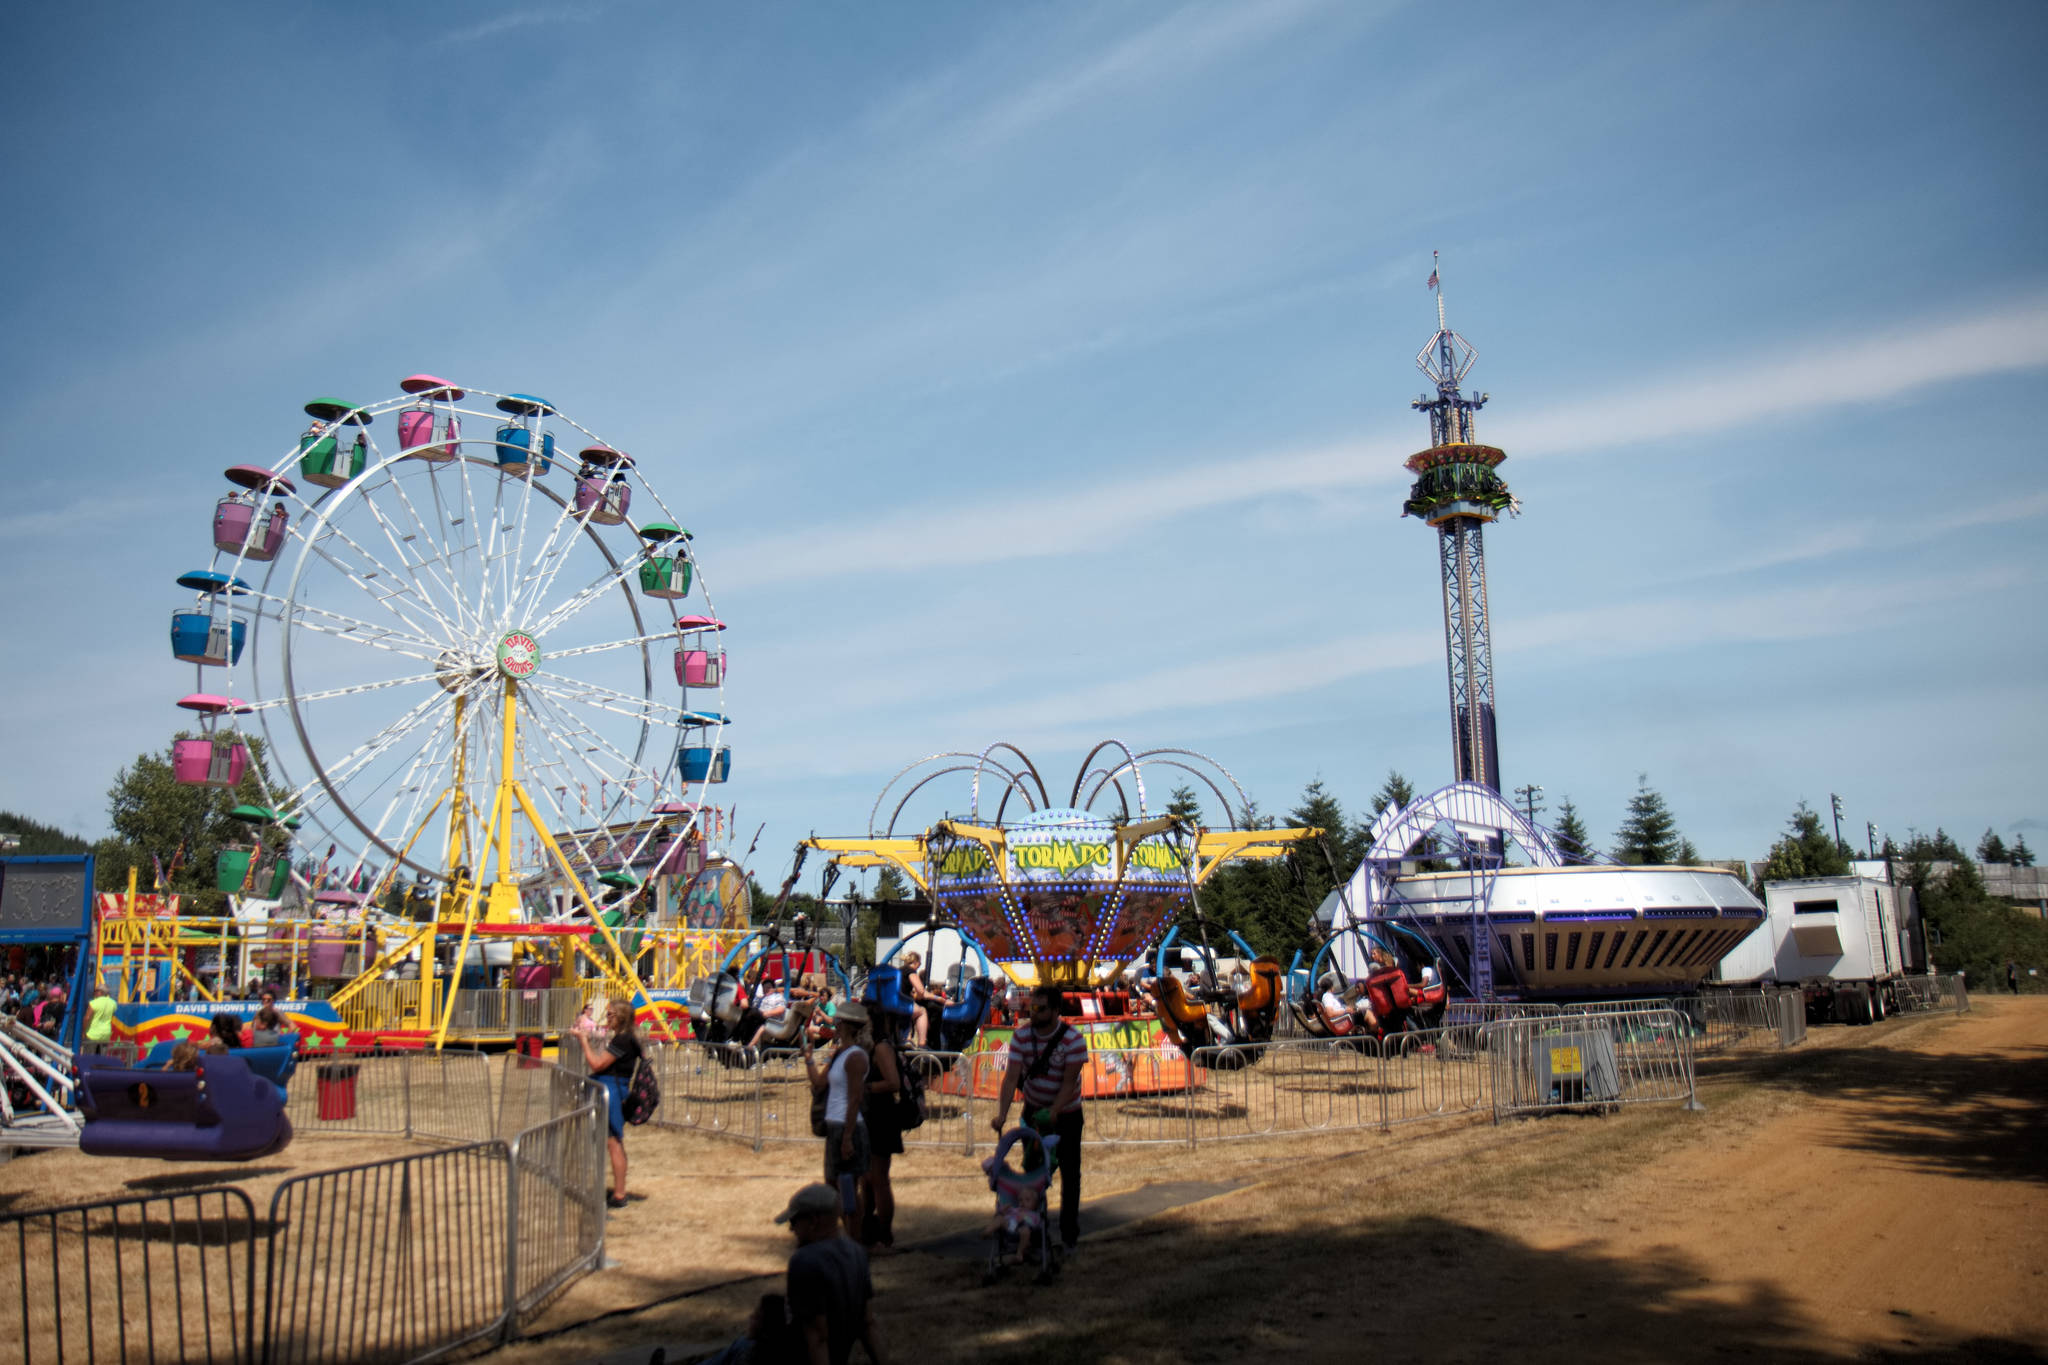 RYAN SPARKS | THE DAILY WORLD The Grays Harbor County Fair began on Thursday and runs through the weekend.